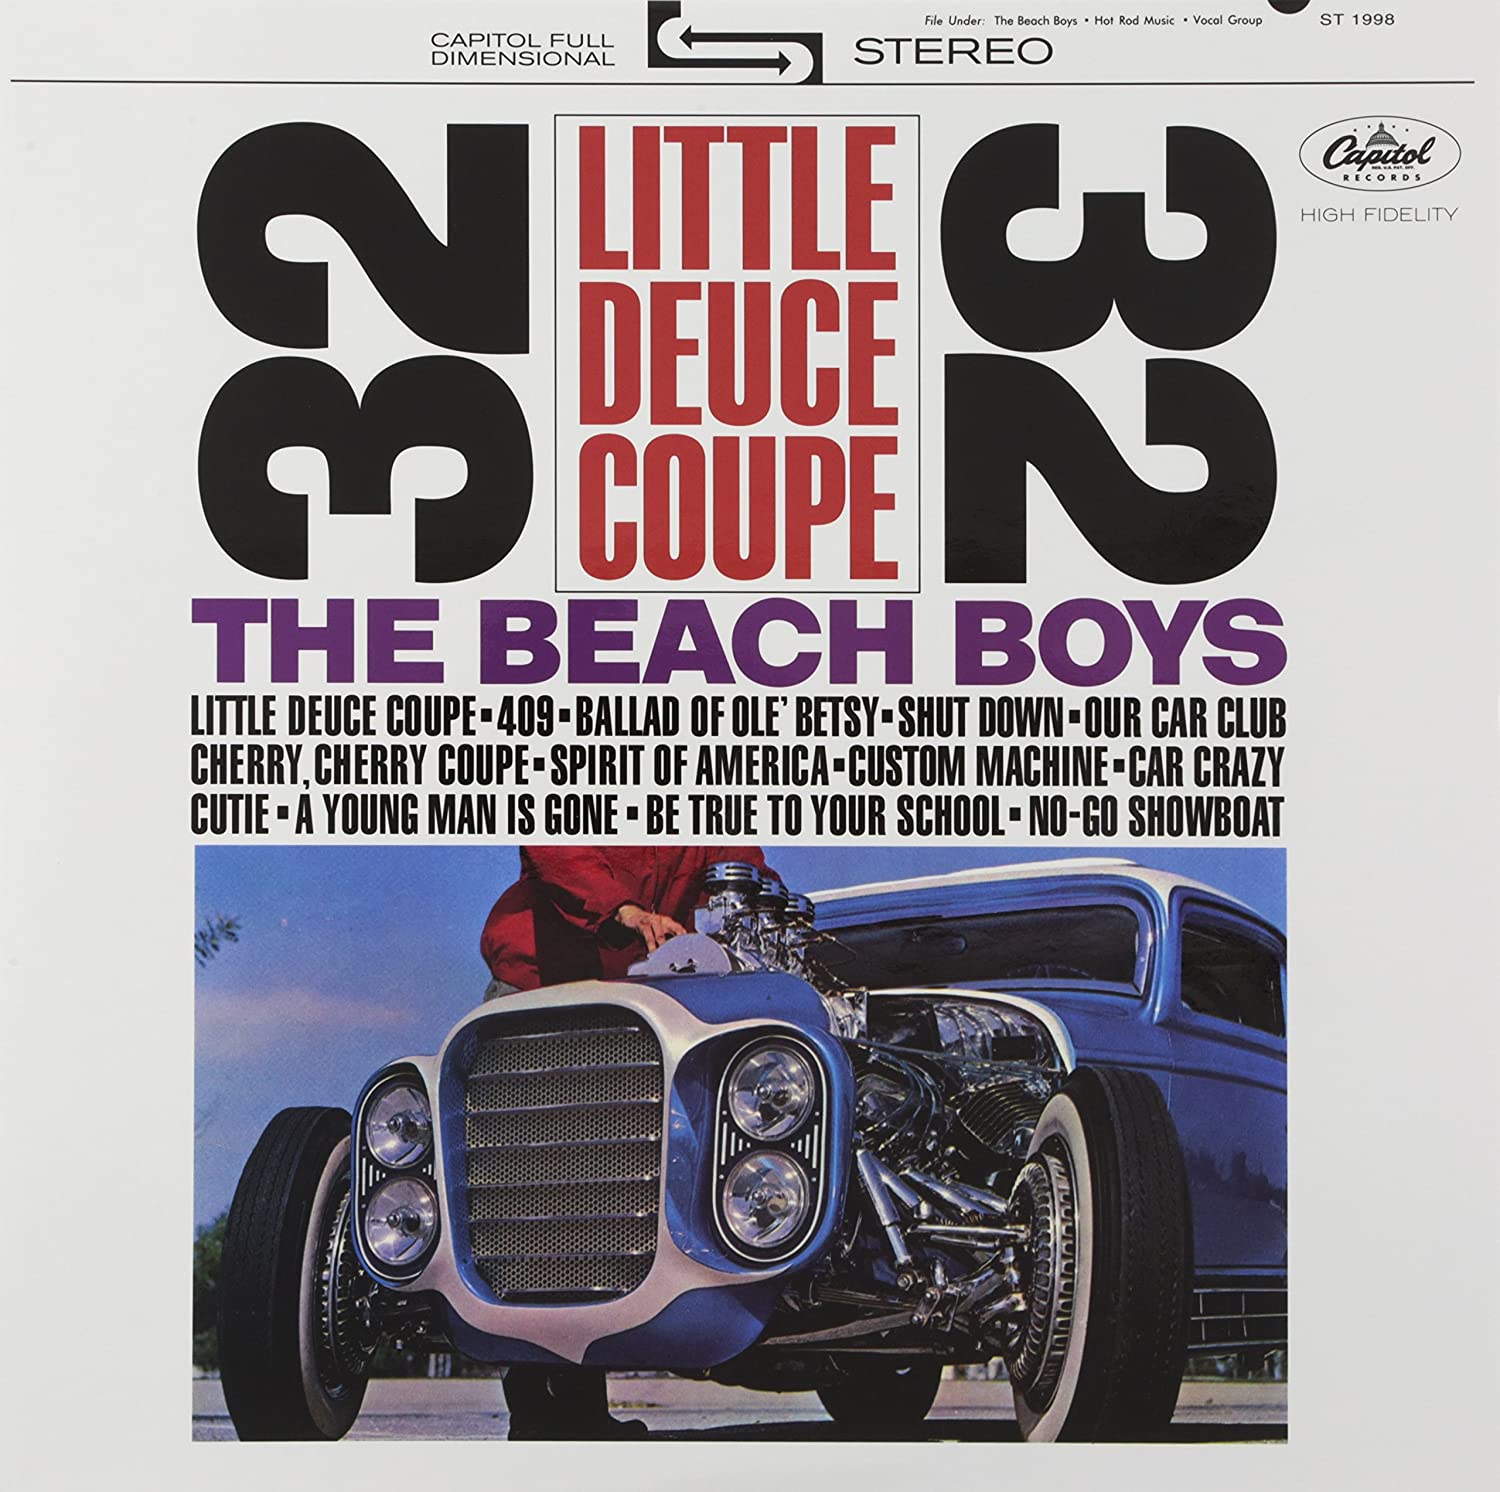 The Beach Boys - Little Deuce Coupe [Stereo]